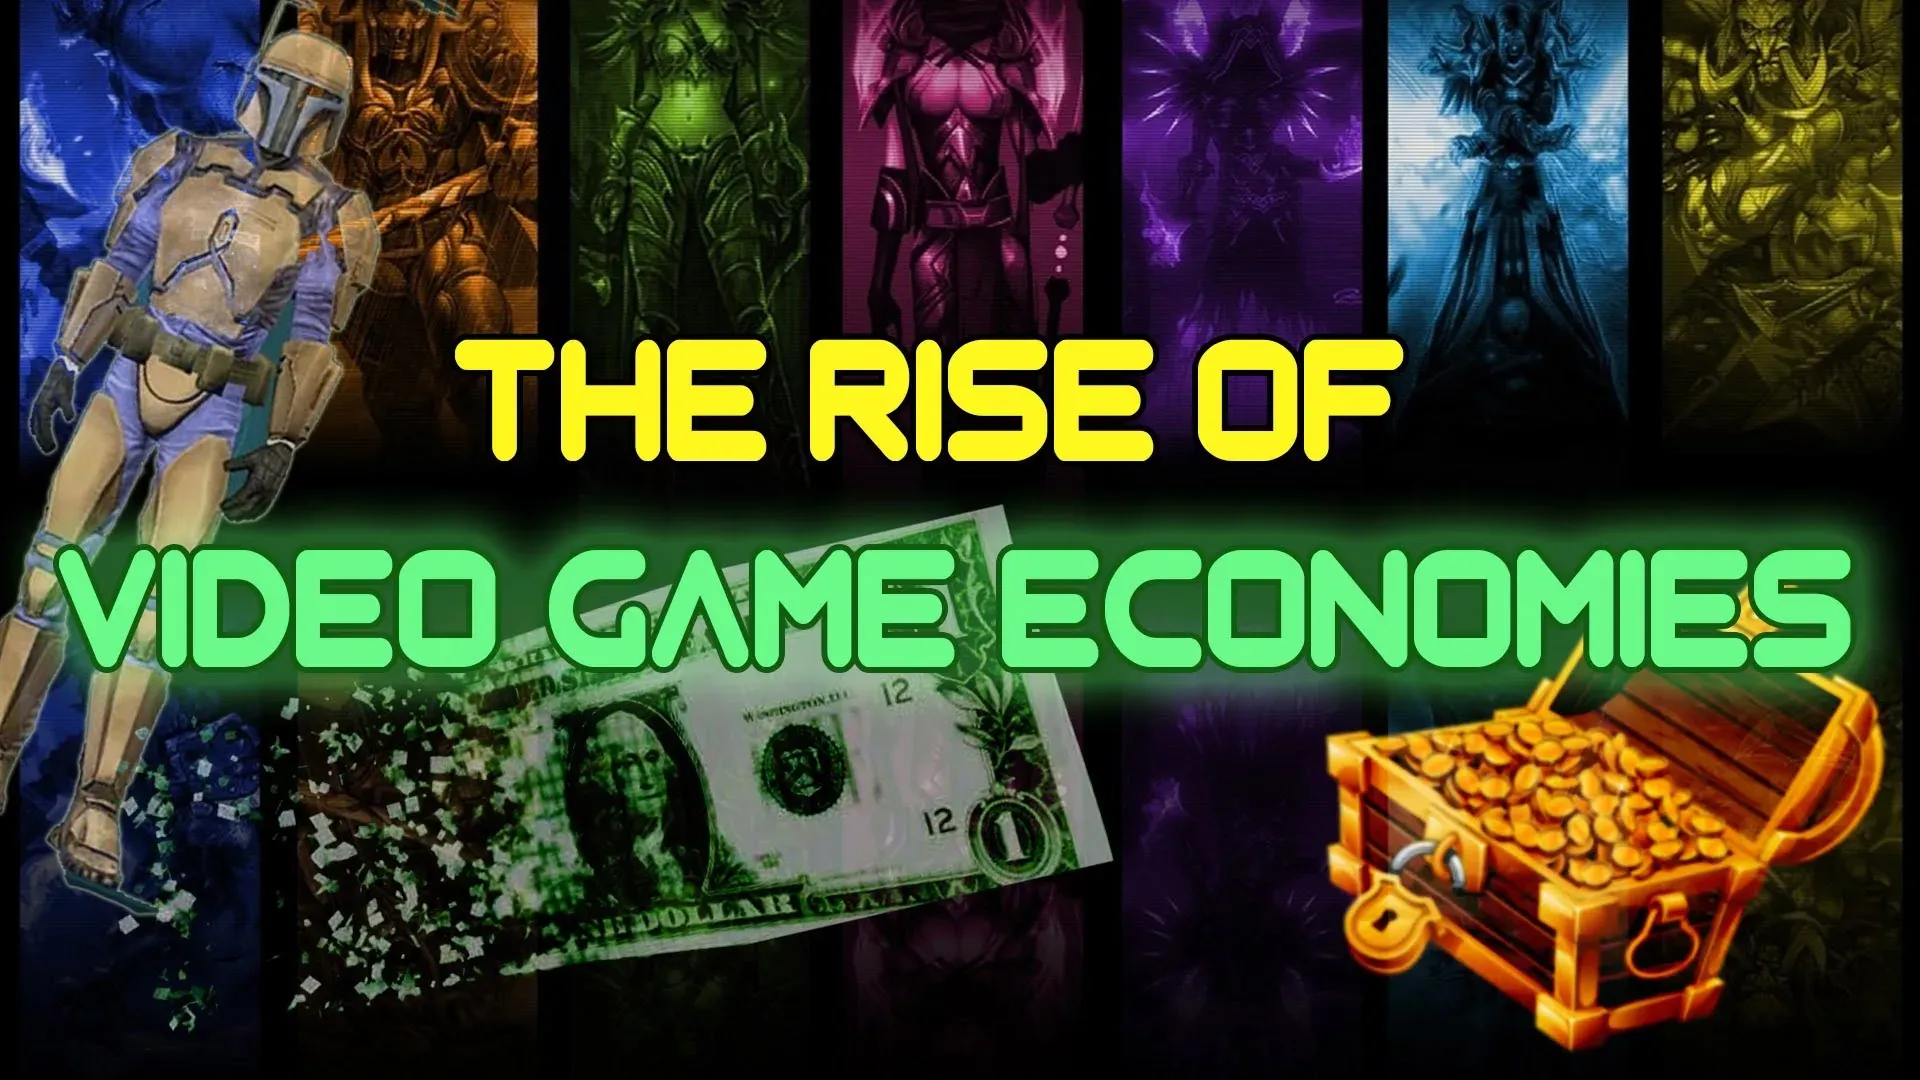 Artwork symbolizing the creative aspects of gaming economies